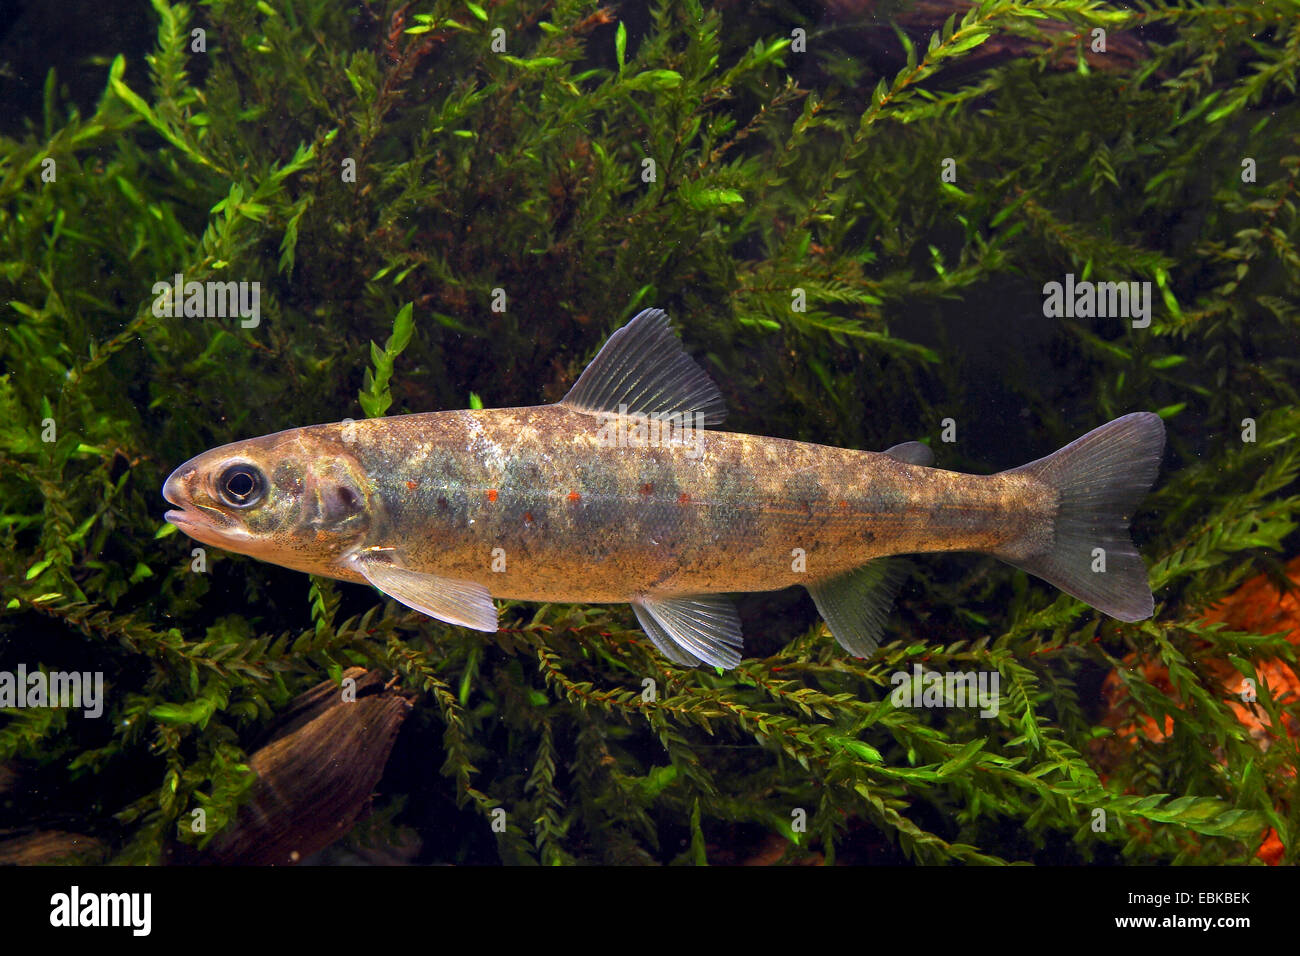 Atlantic salmon, ouananiche, lake Atlantic salmon, landlocked salmon, Sebago salmon (Salmo salar), young fish among algae Stock Photo